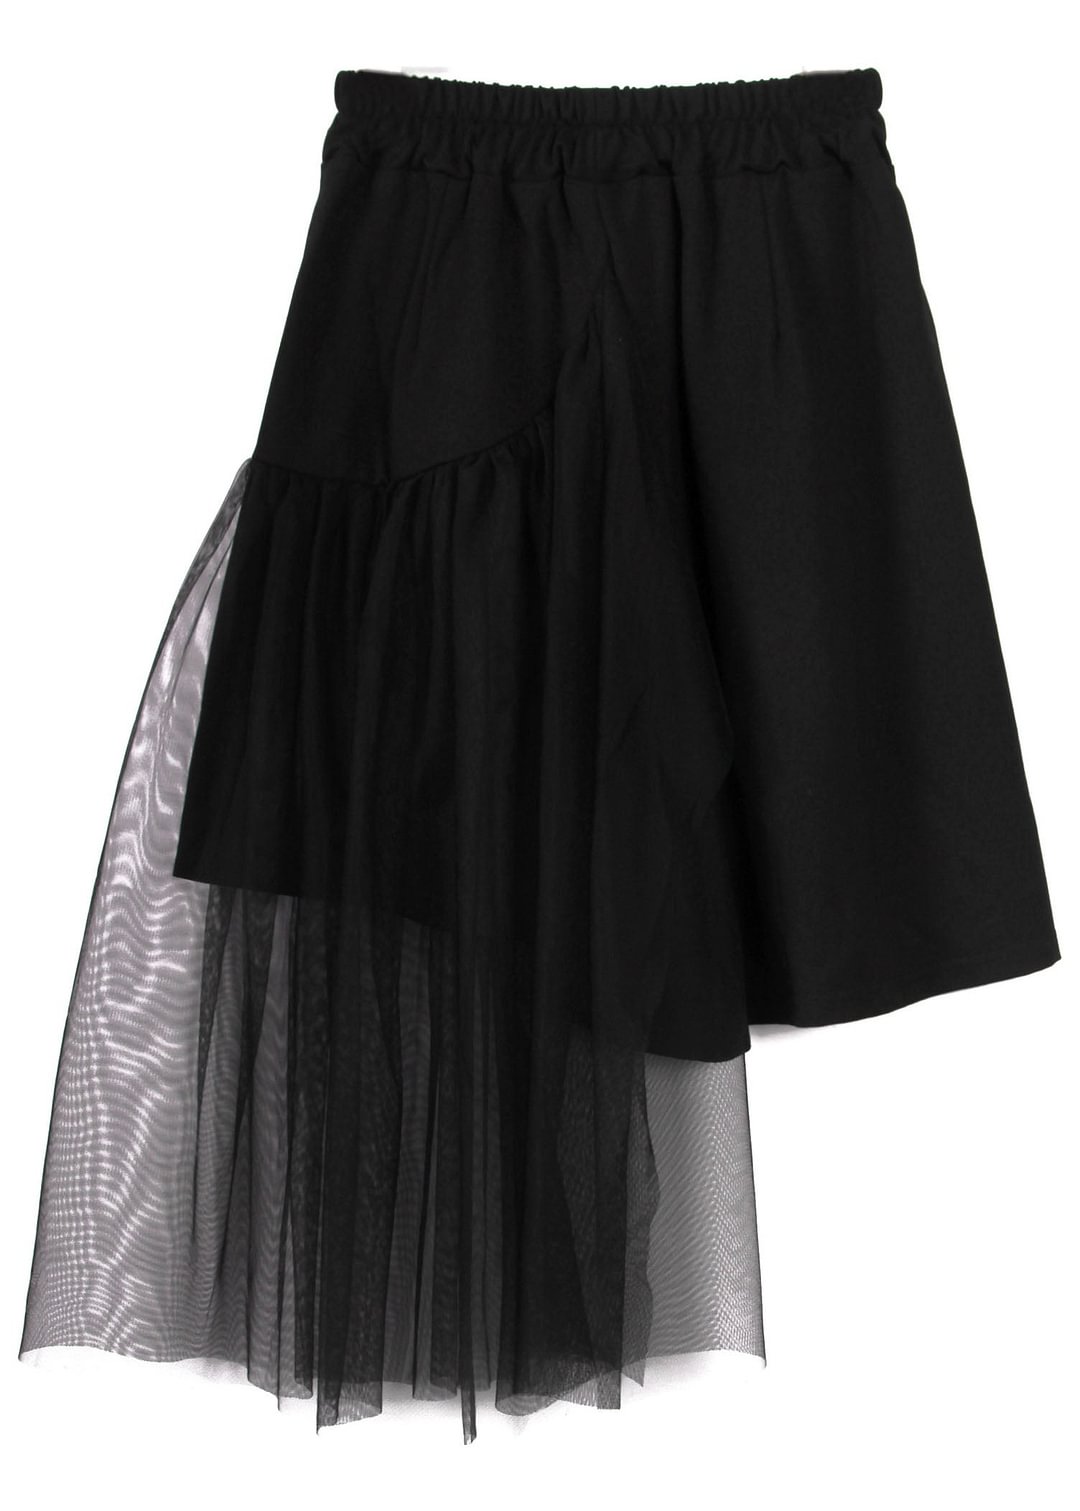 French Black Patchwork Tulle Skirt Pants Skirt CK1846- Fabulory